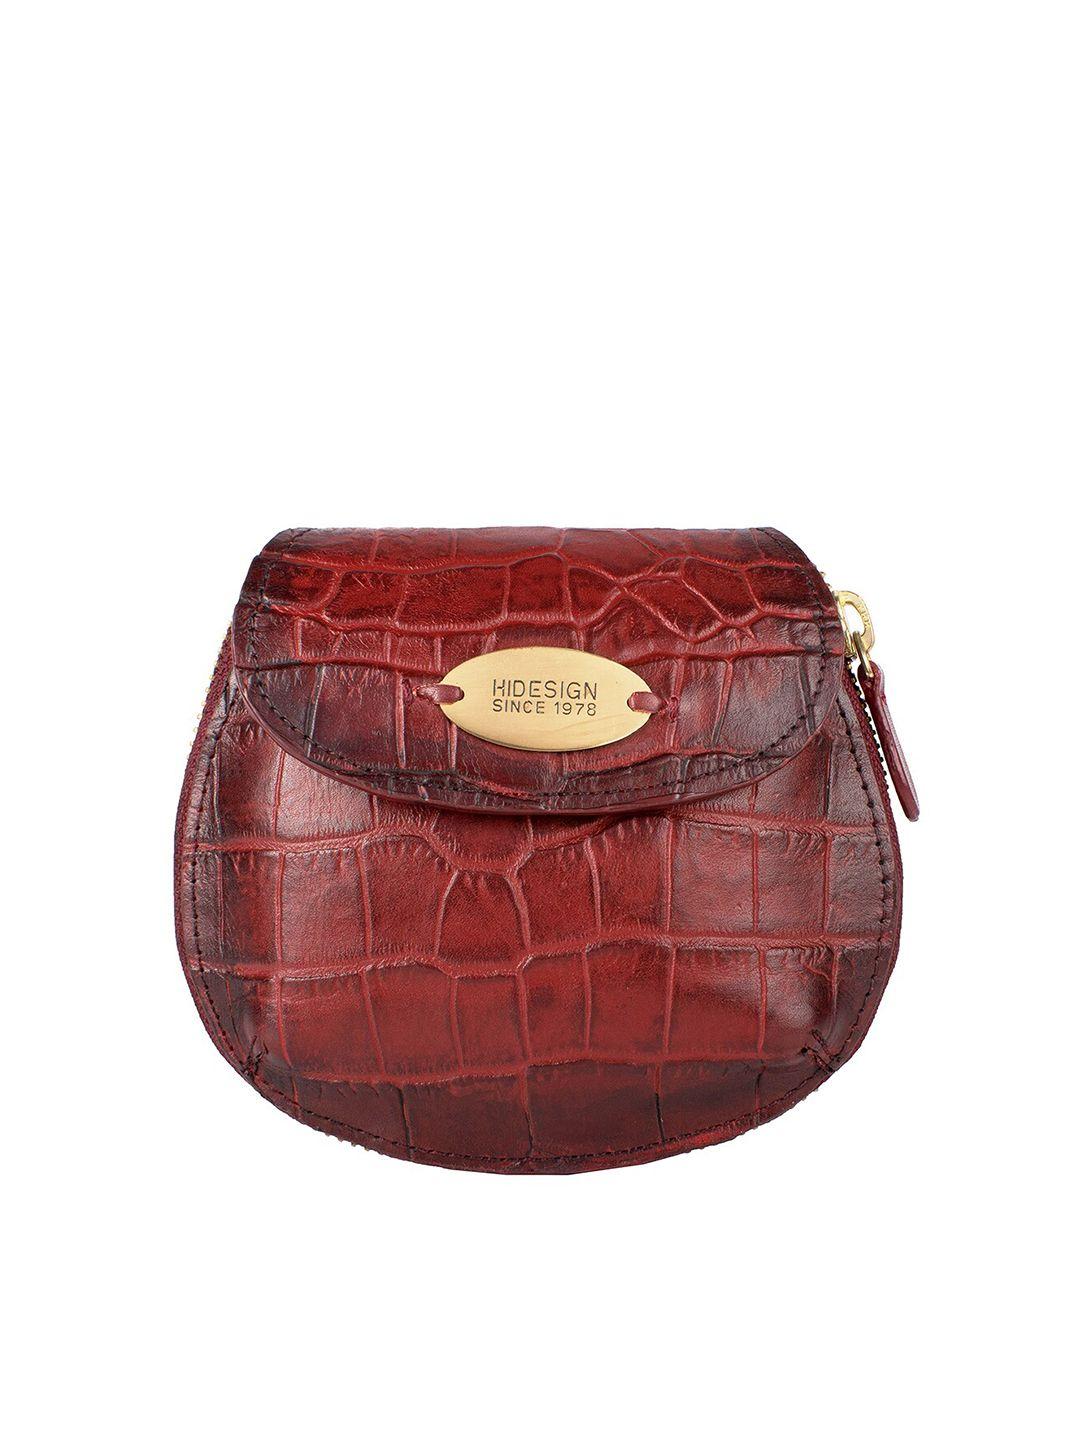 hidesign women textured purse clutch